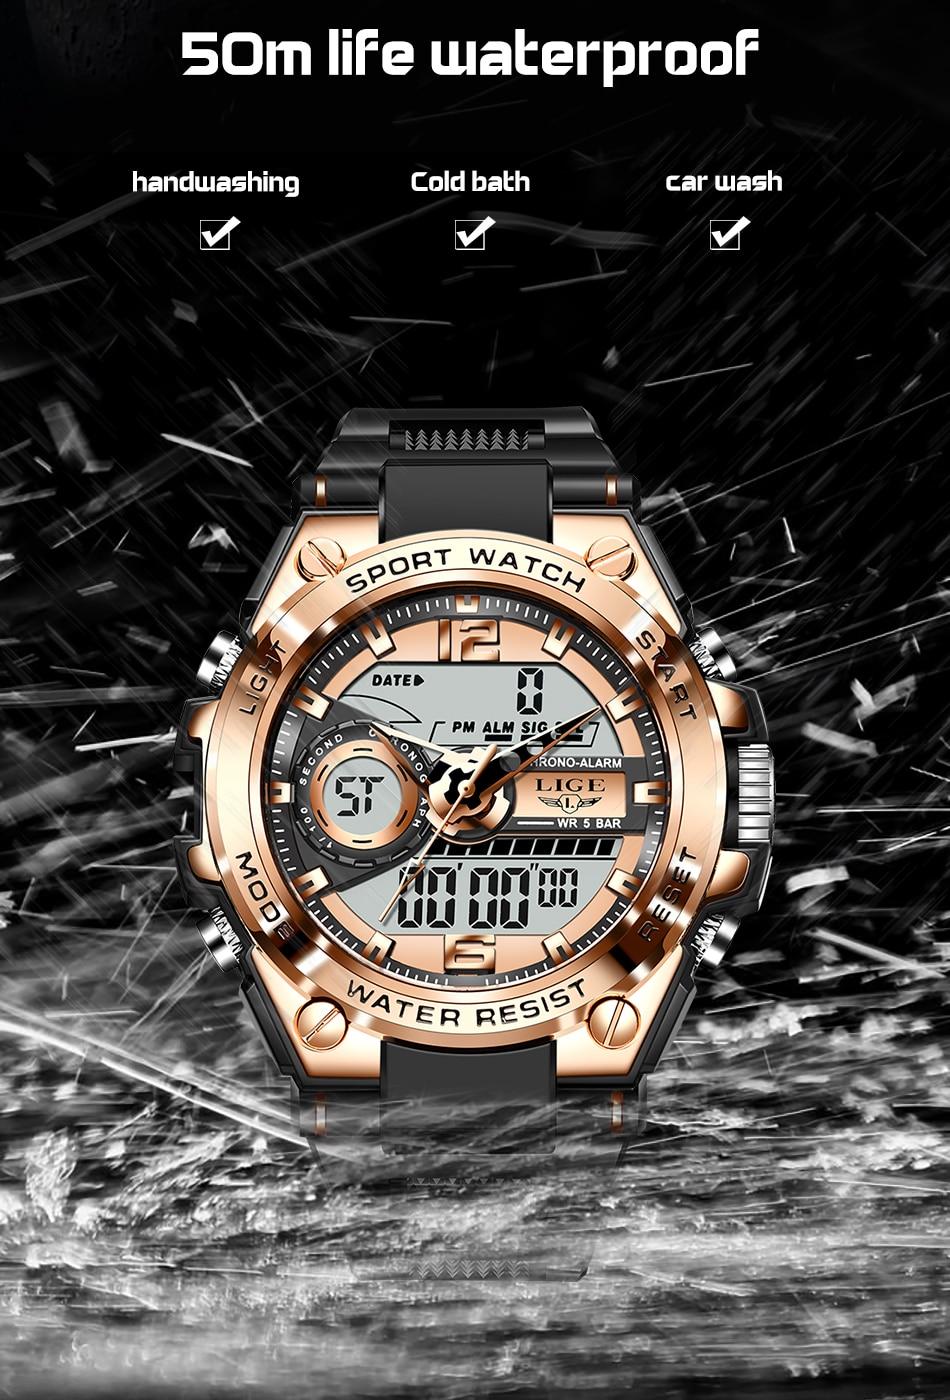 LIGE New Sports Men's Watches Top Brand Luxury Military Quartz Watch Men Waterproof S Shock Male Clock relogio masculino Display